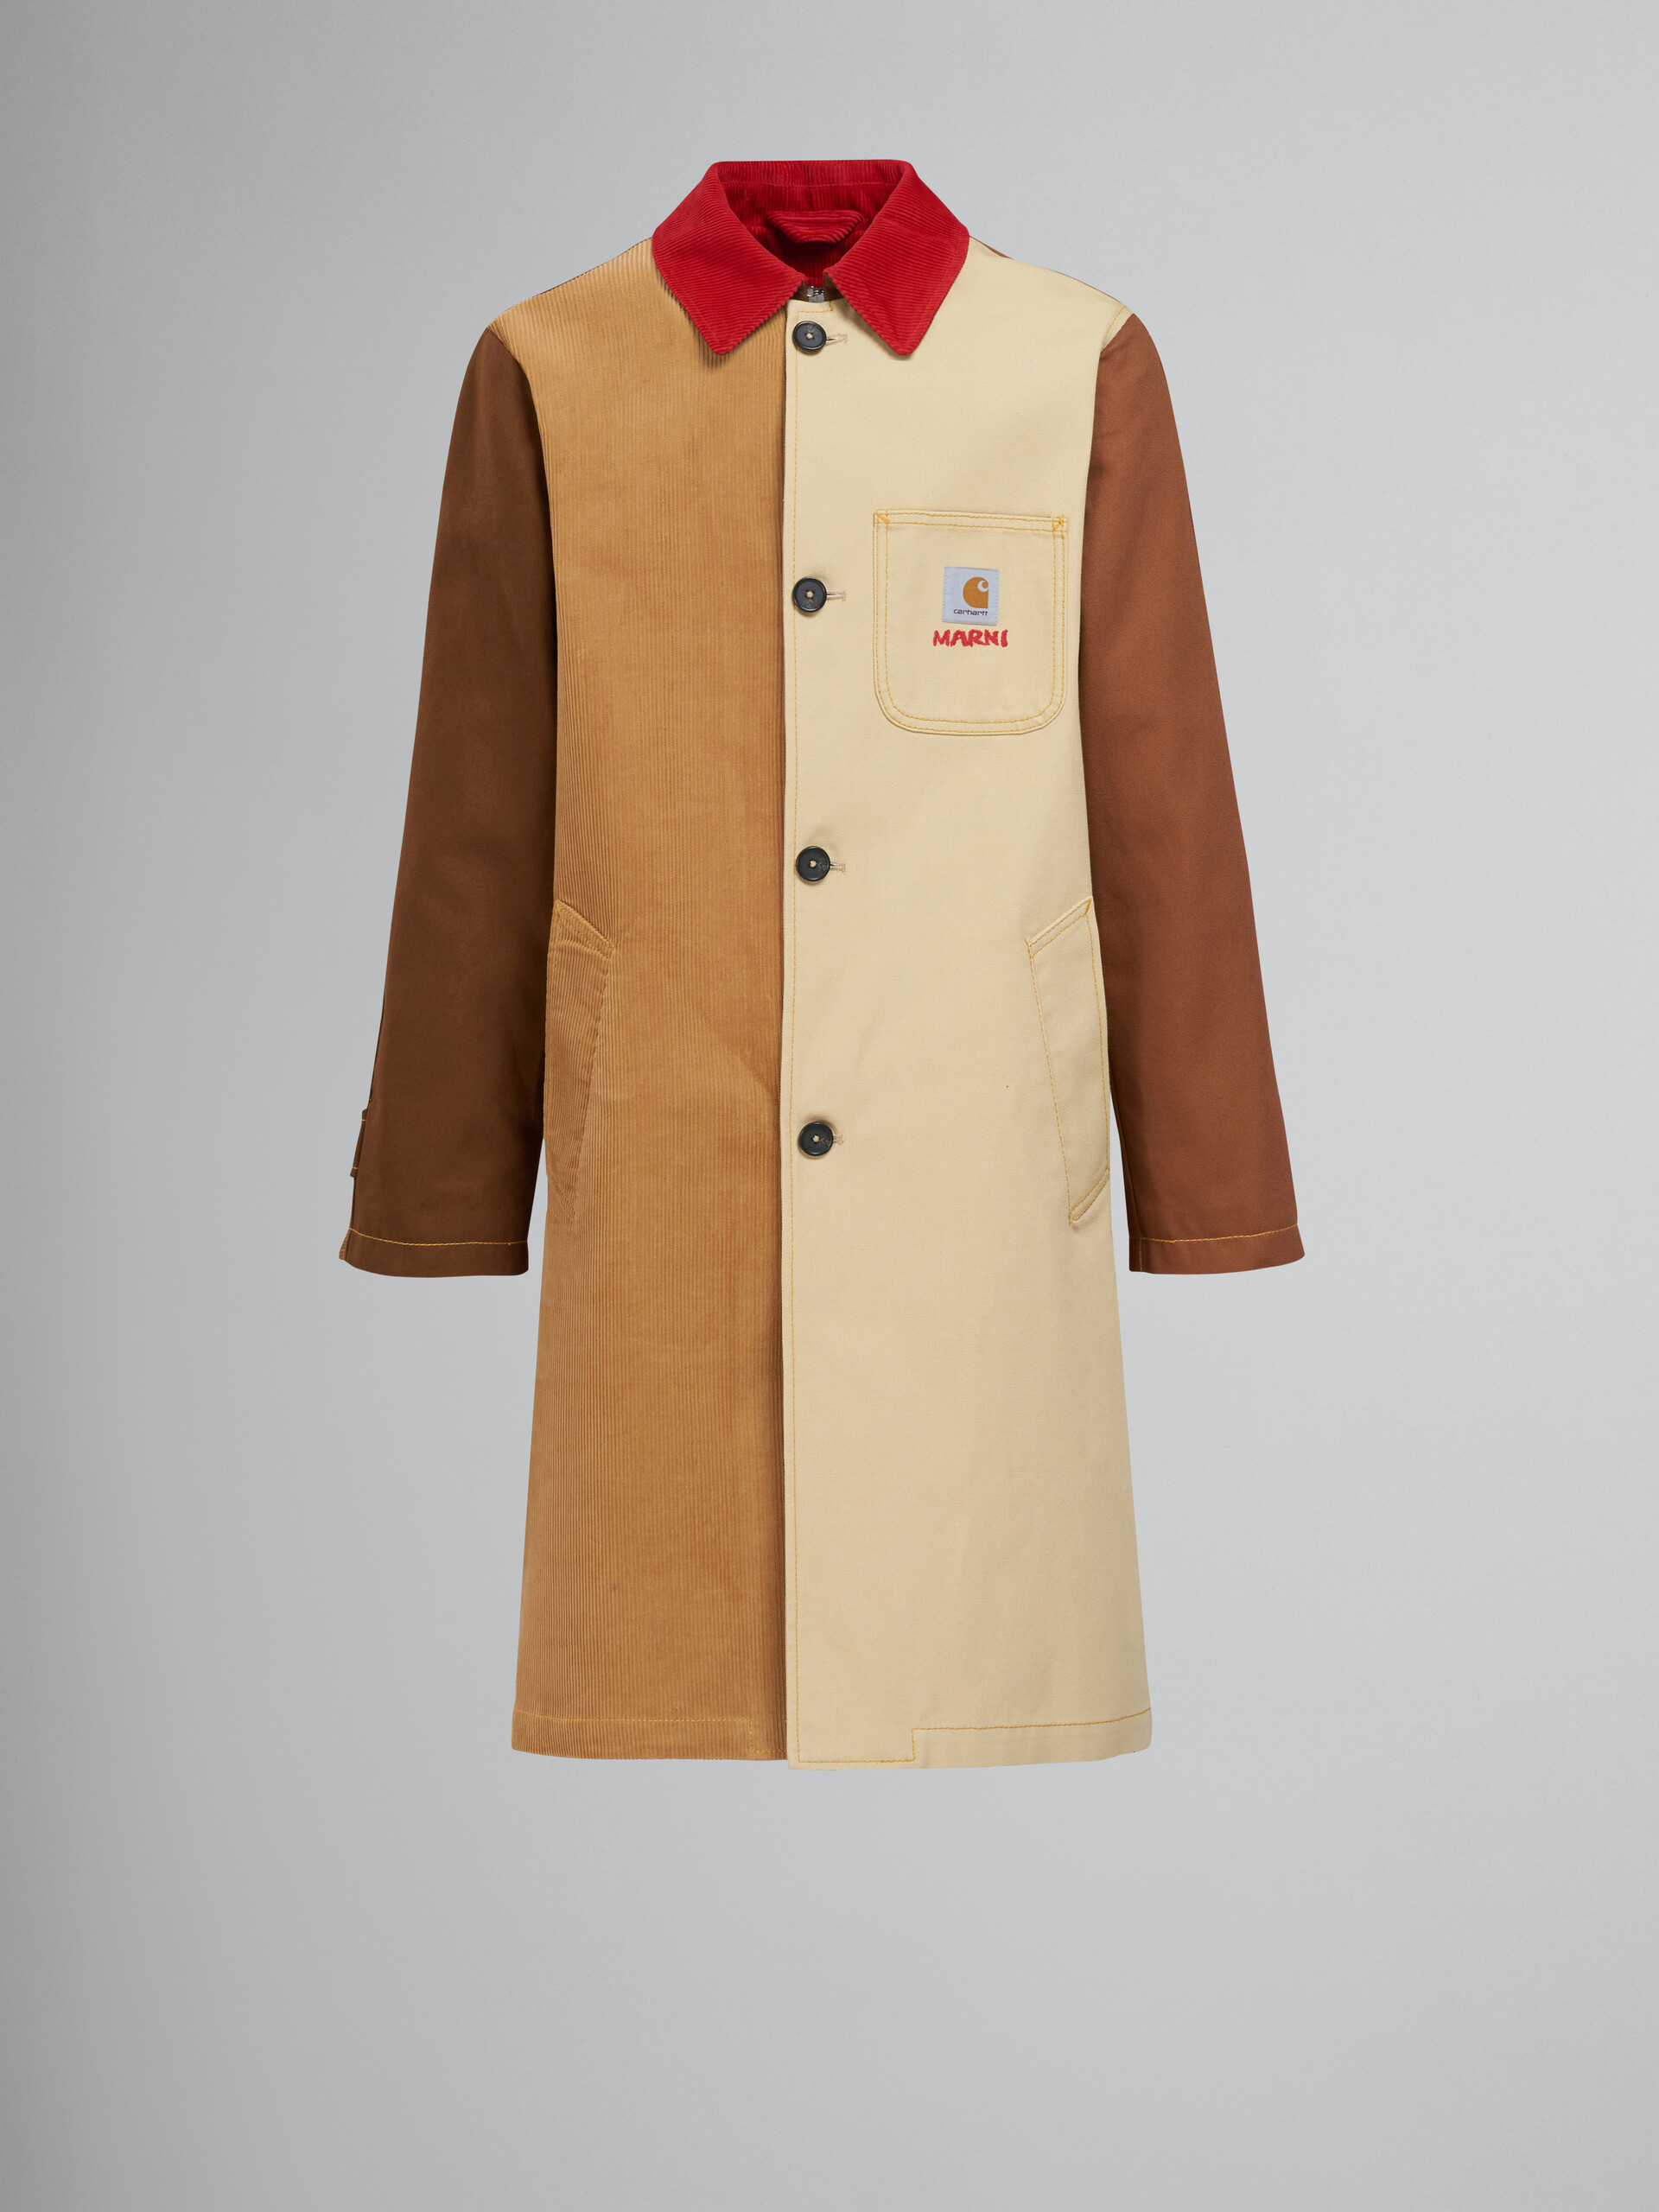 MARNI x CARHARTT WIP - brown colour-block coat - Coats - Image 1